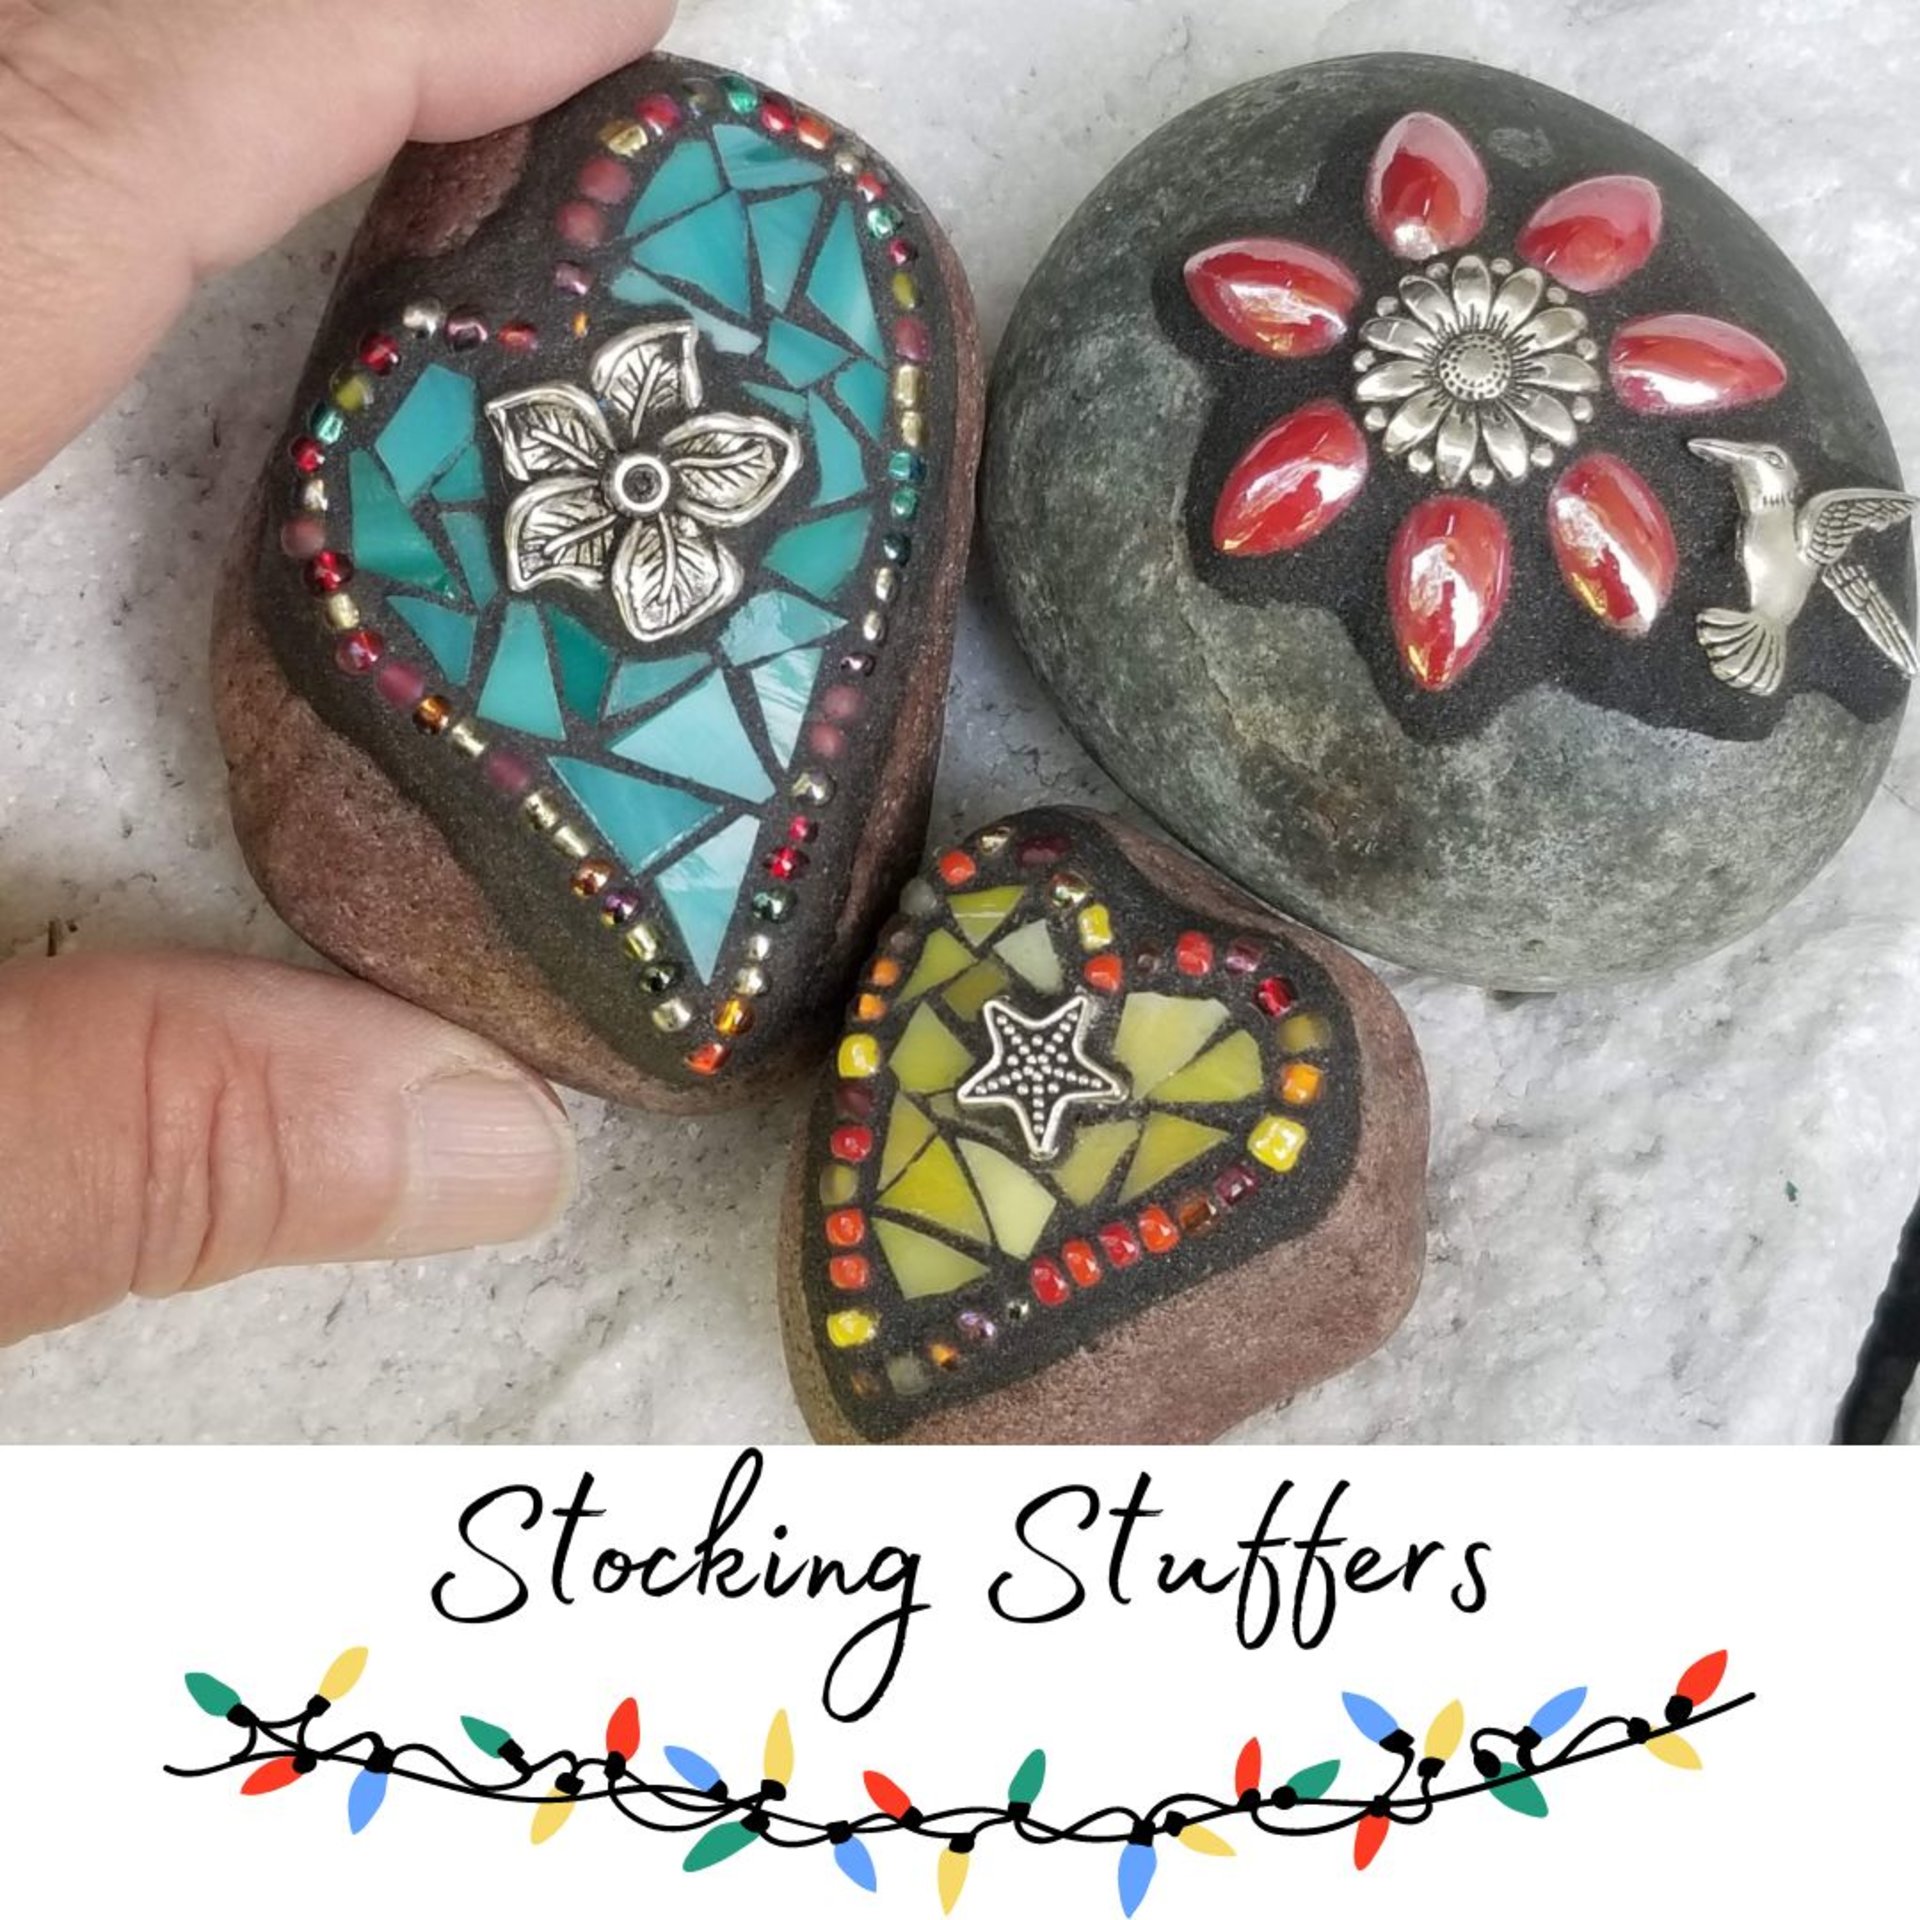 Mosaic Garden Stone Paperweights, Secret Santa Stocking Stuffer, #2 Group Mosaic Heart and Rocks,   